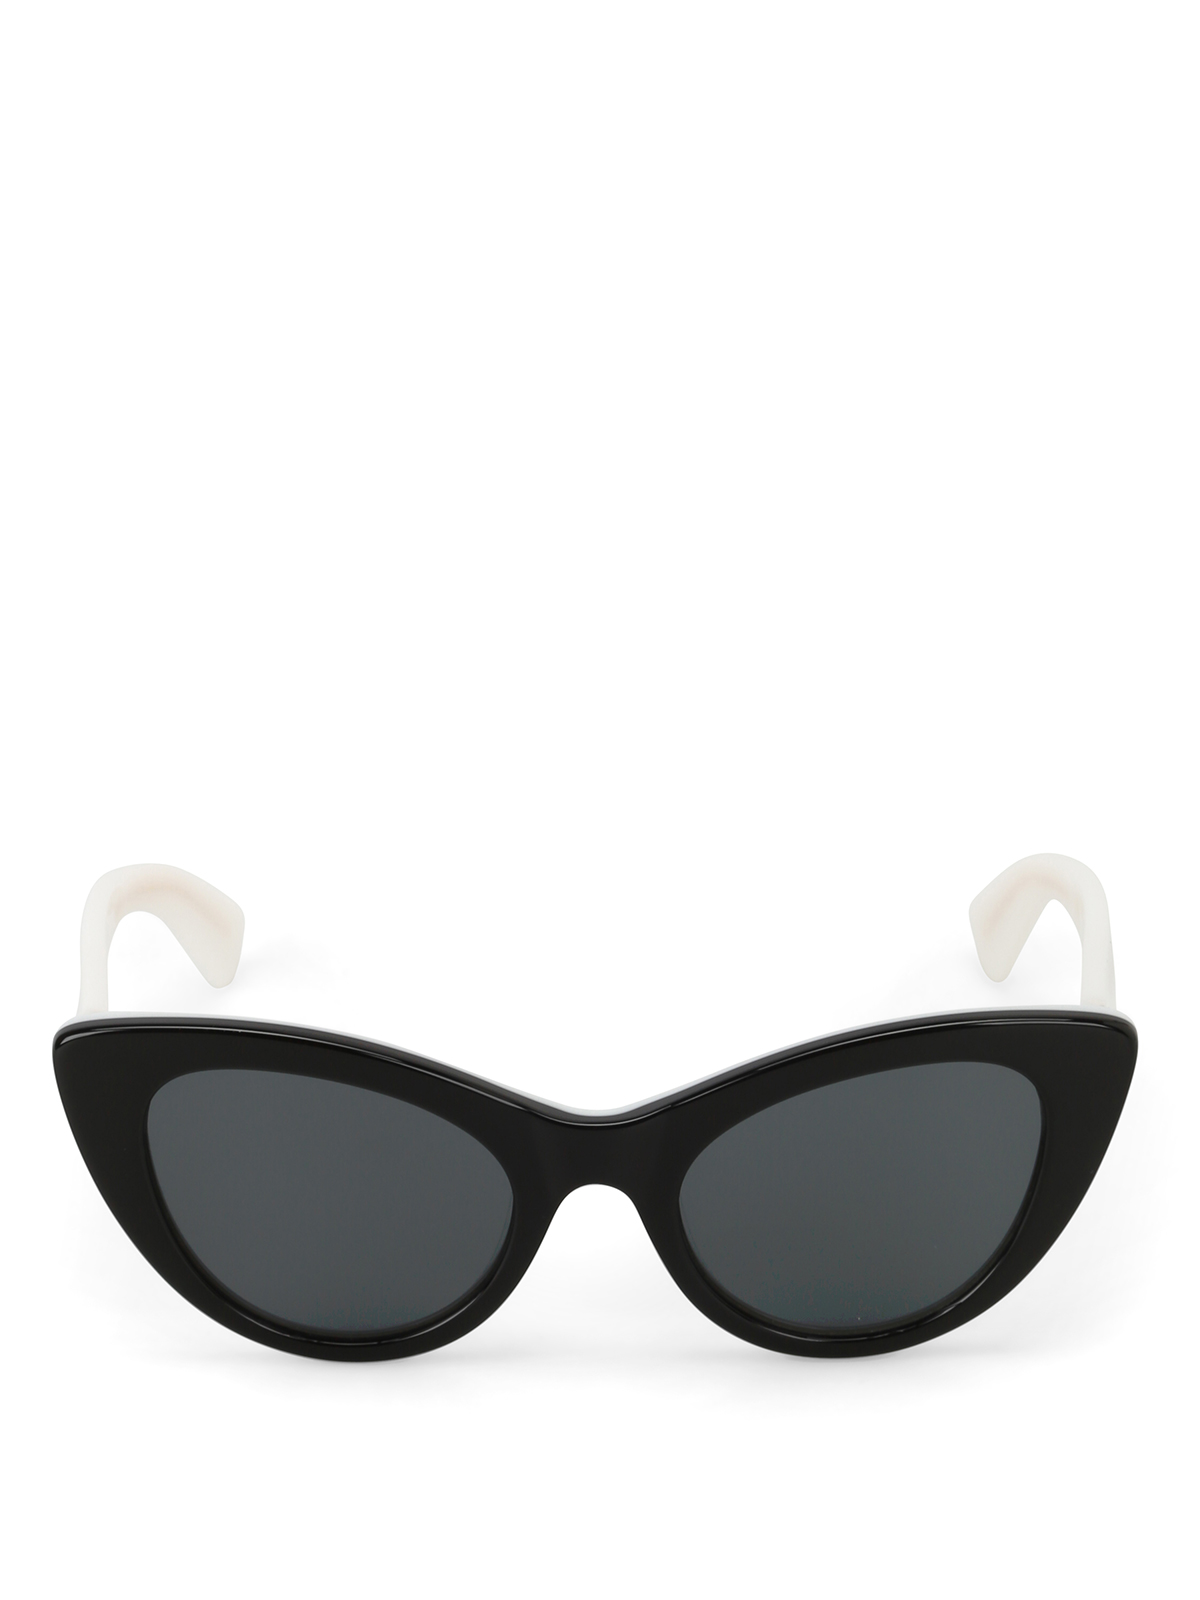 Sunglasses Kate Spade - Deandra cat-eye sunglasses - DEANDRASRRKIR